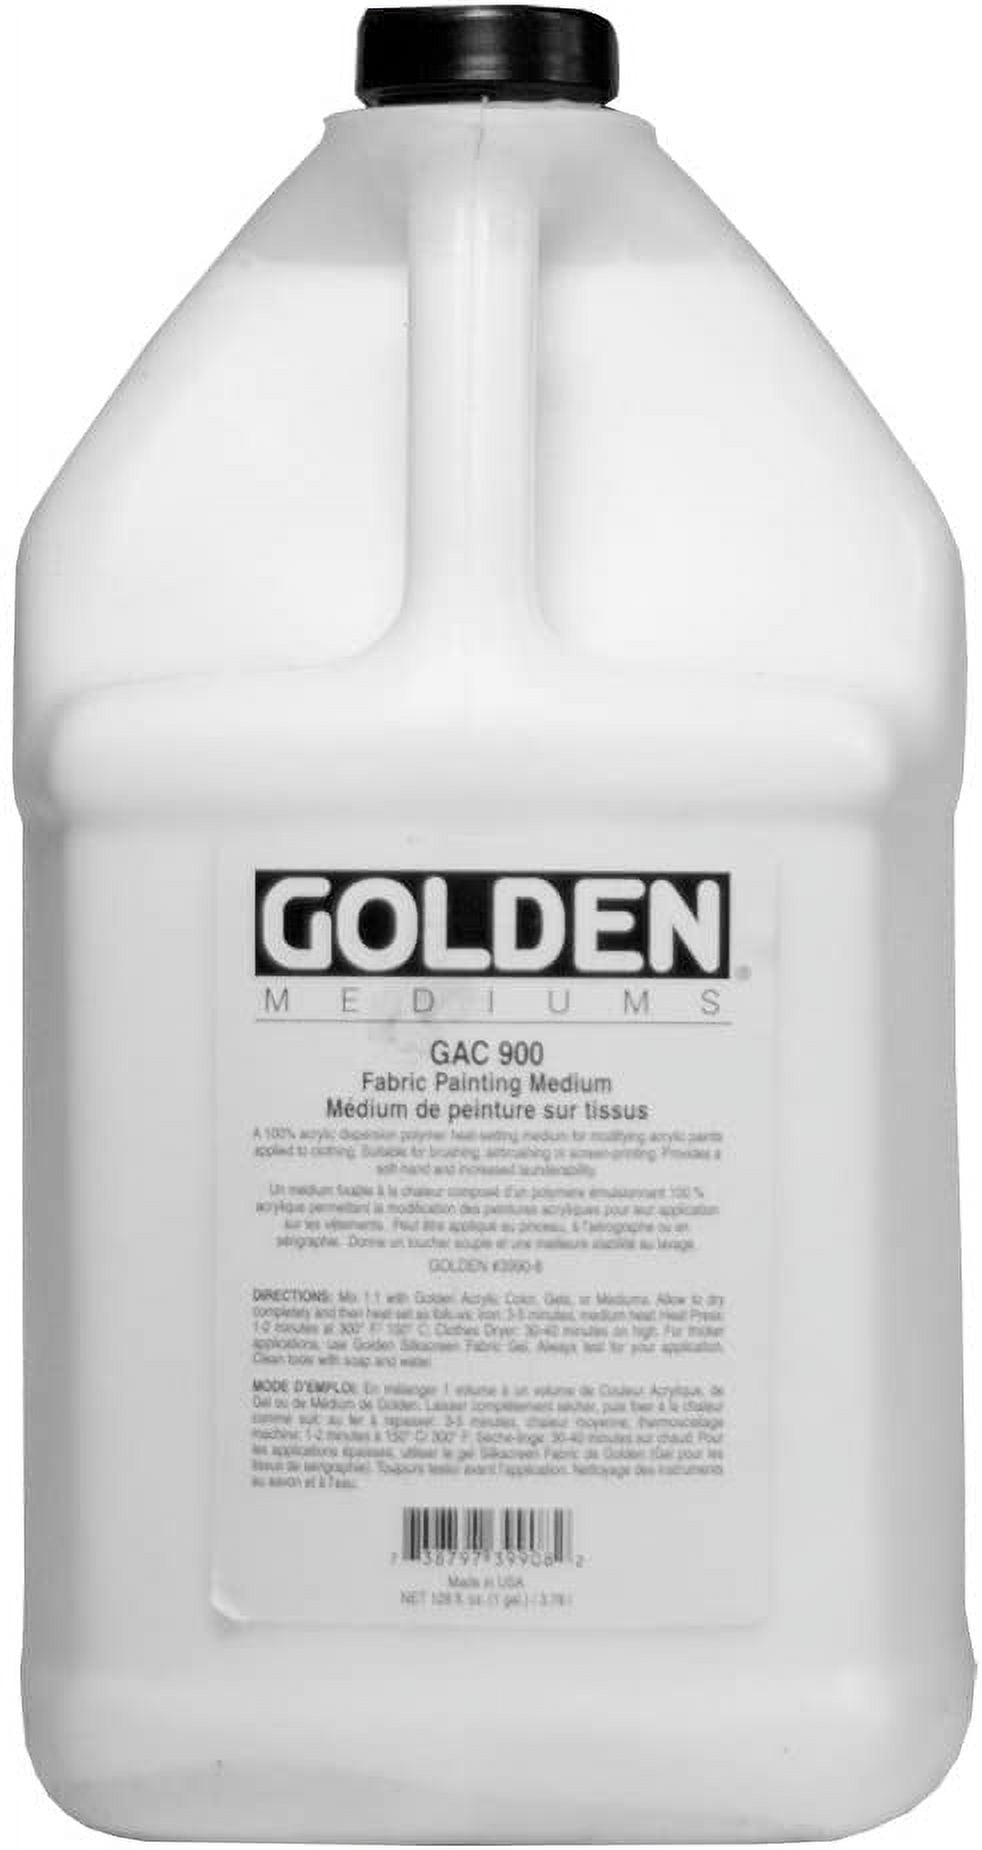 Golden GAC 900 Heat-Set Fabric Painting Medium, 128 oz 